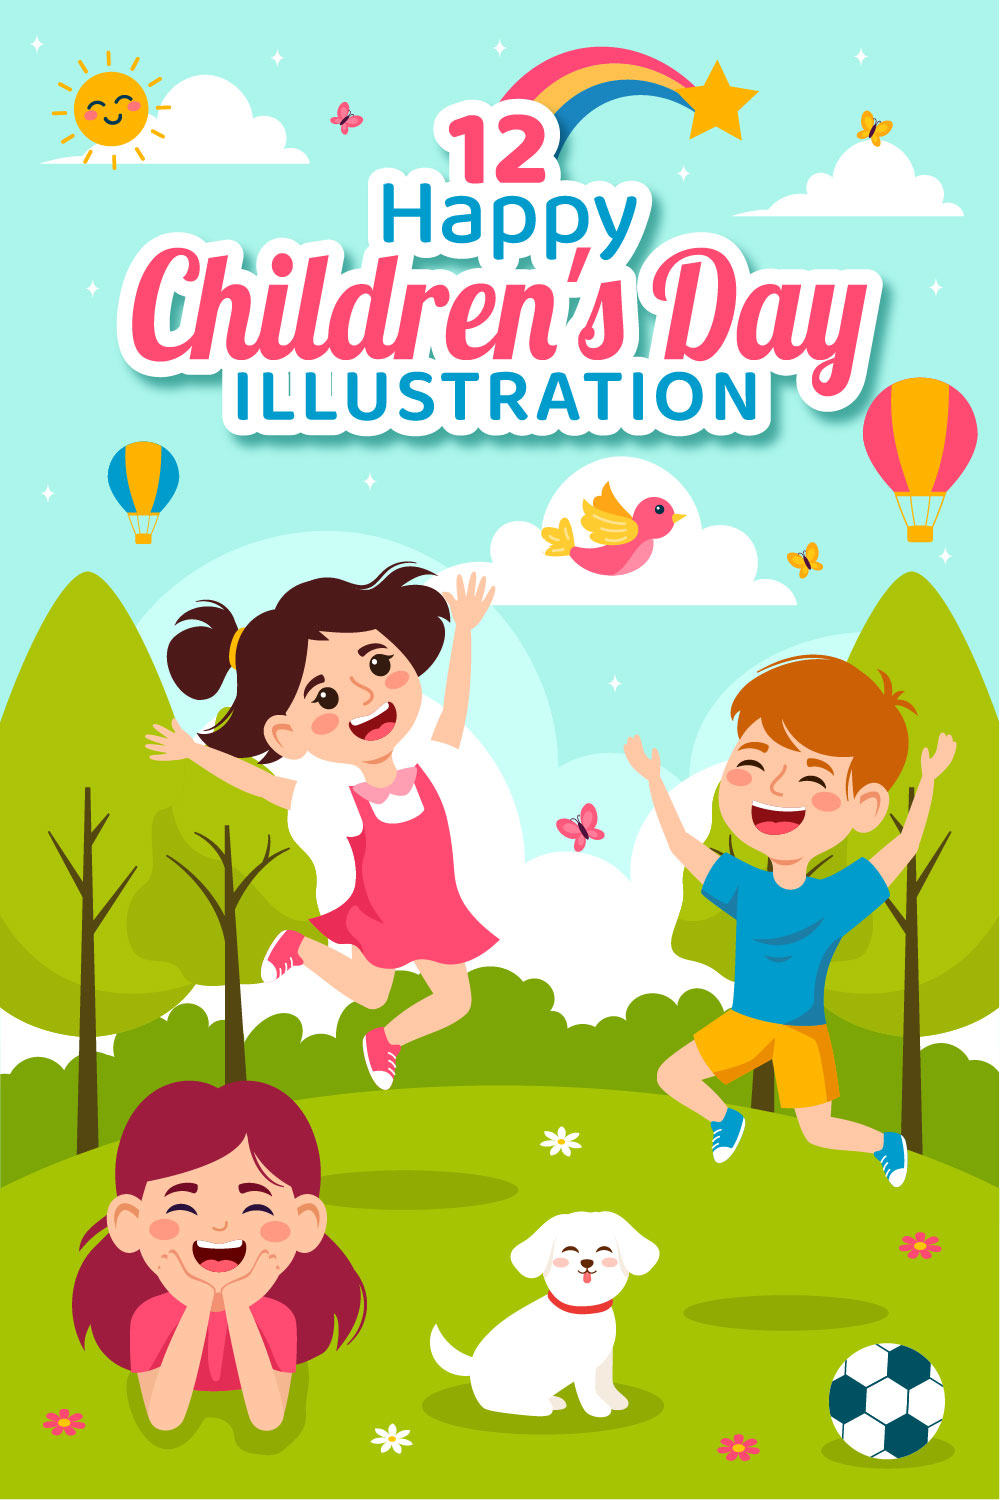 12 Happy Children Day Illustration pinterest preview image.